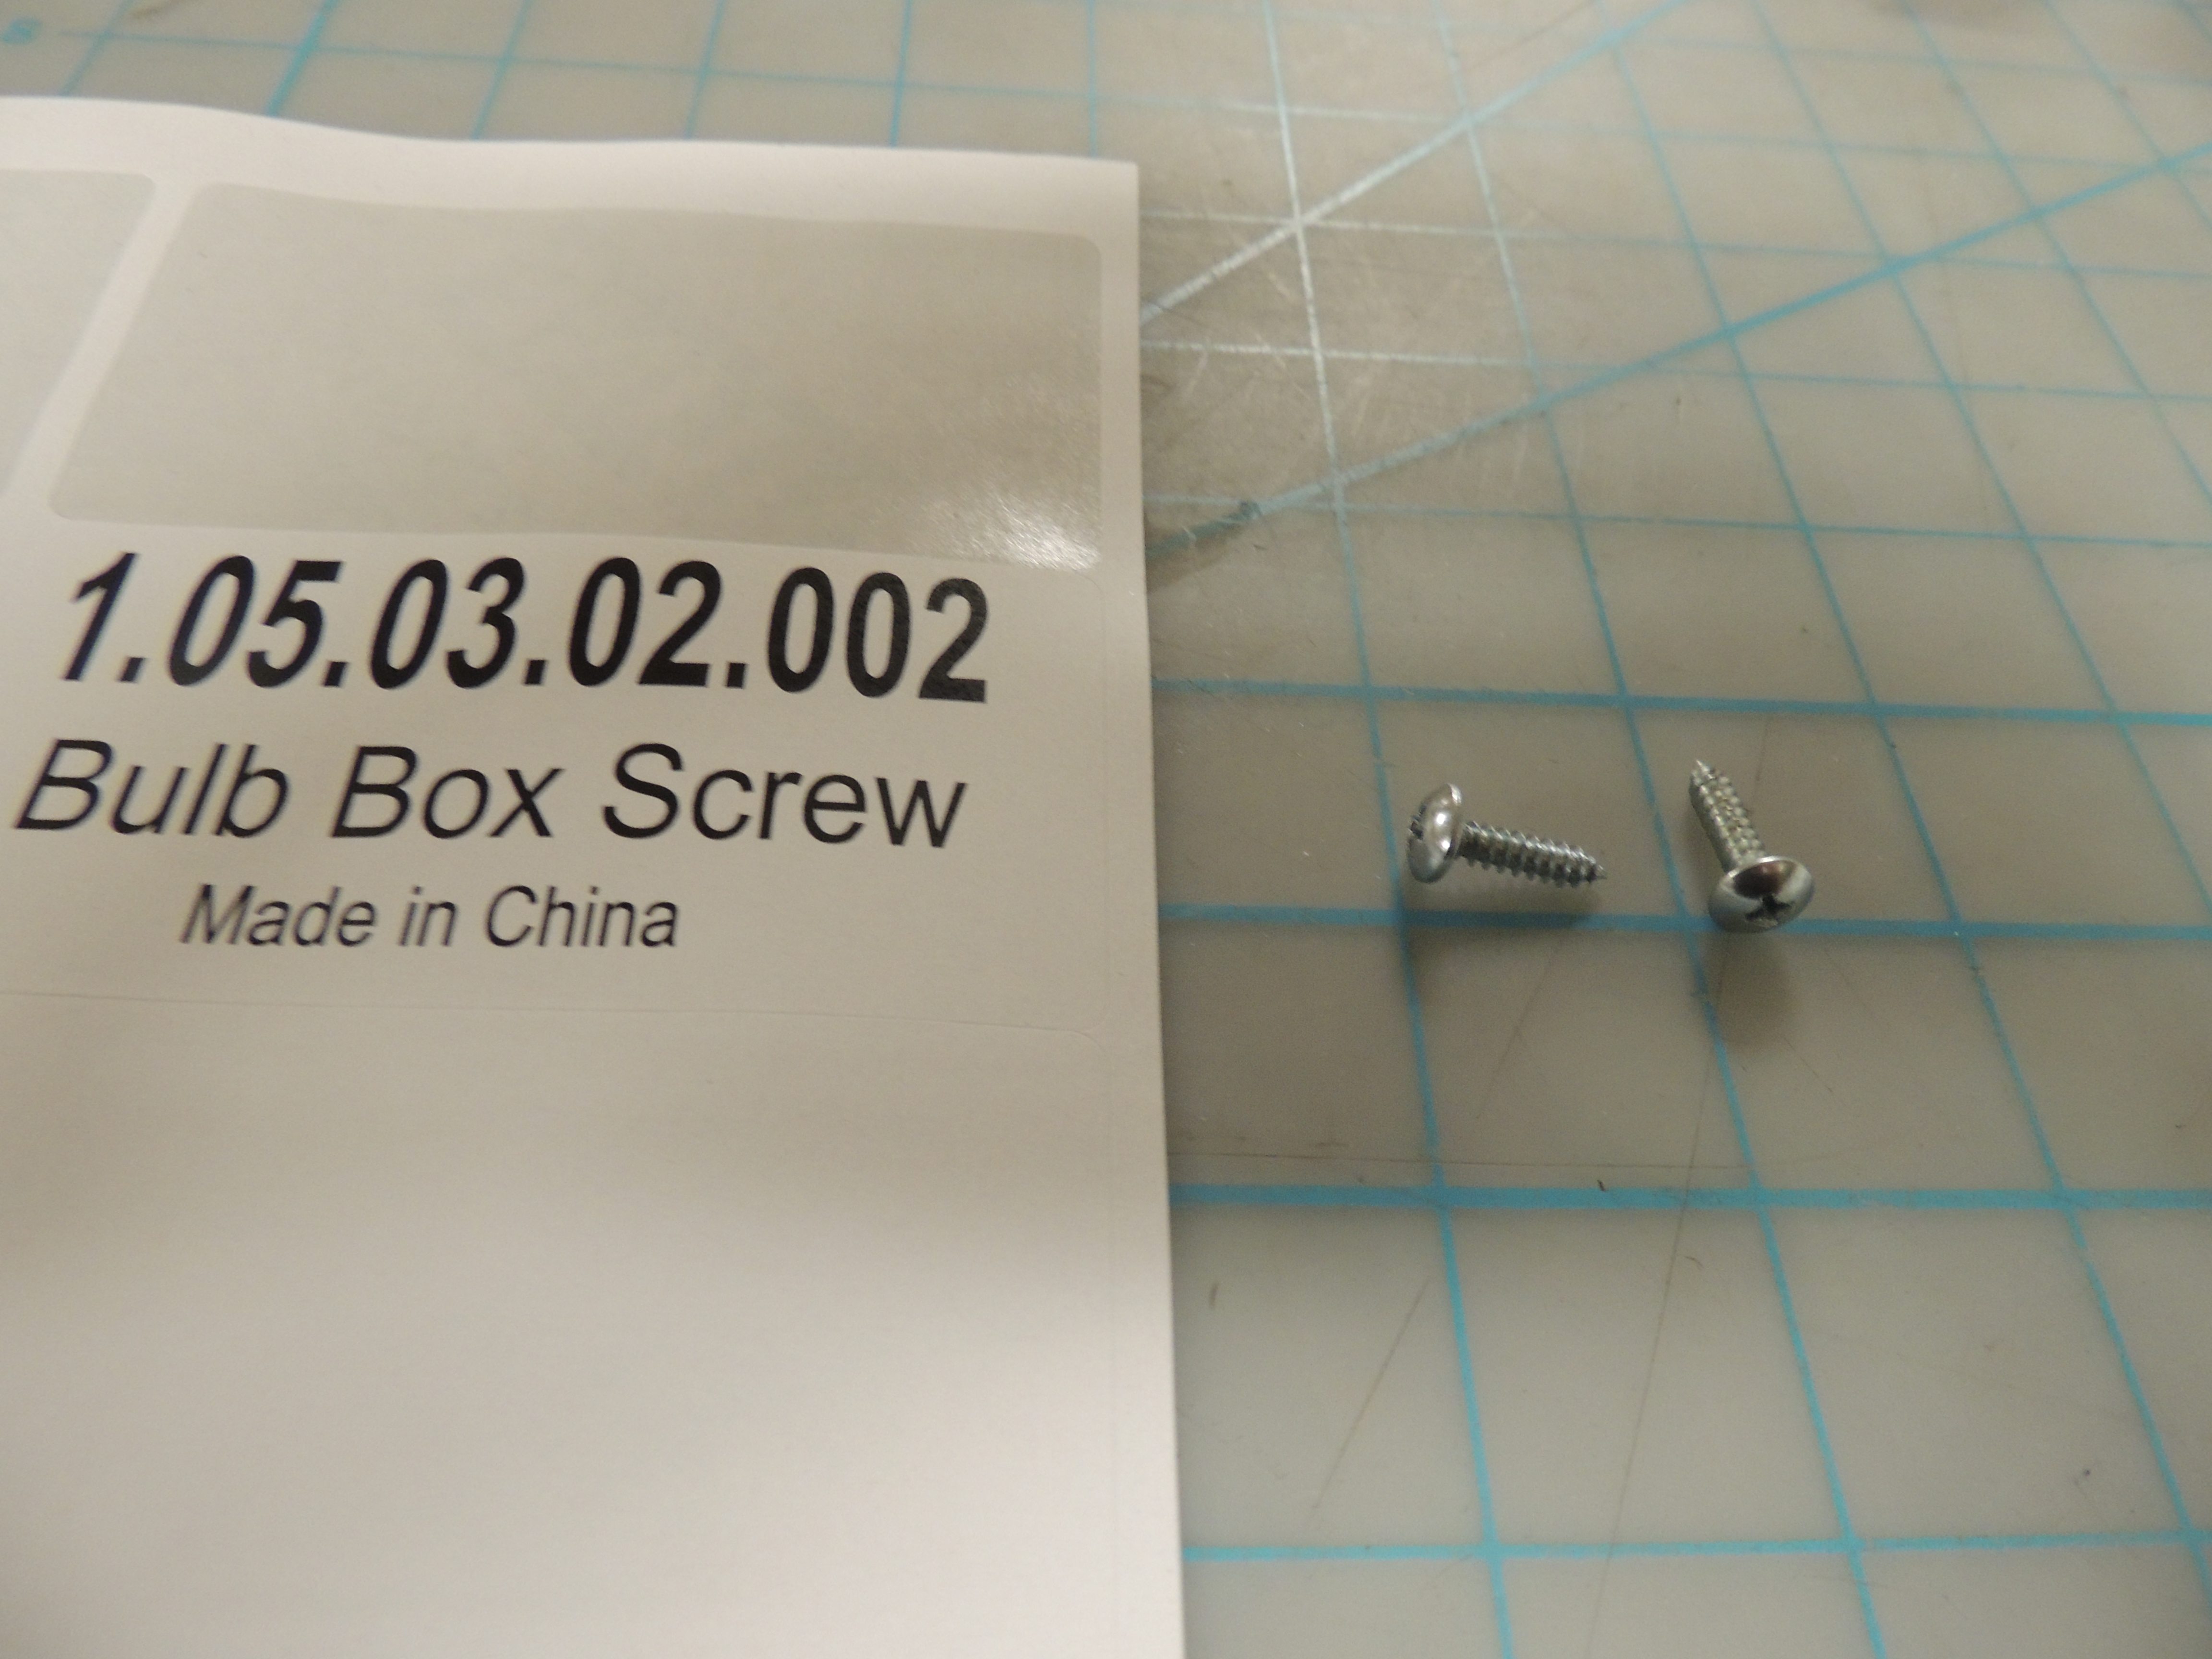 Bulb Box Screw